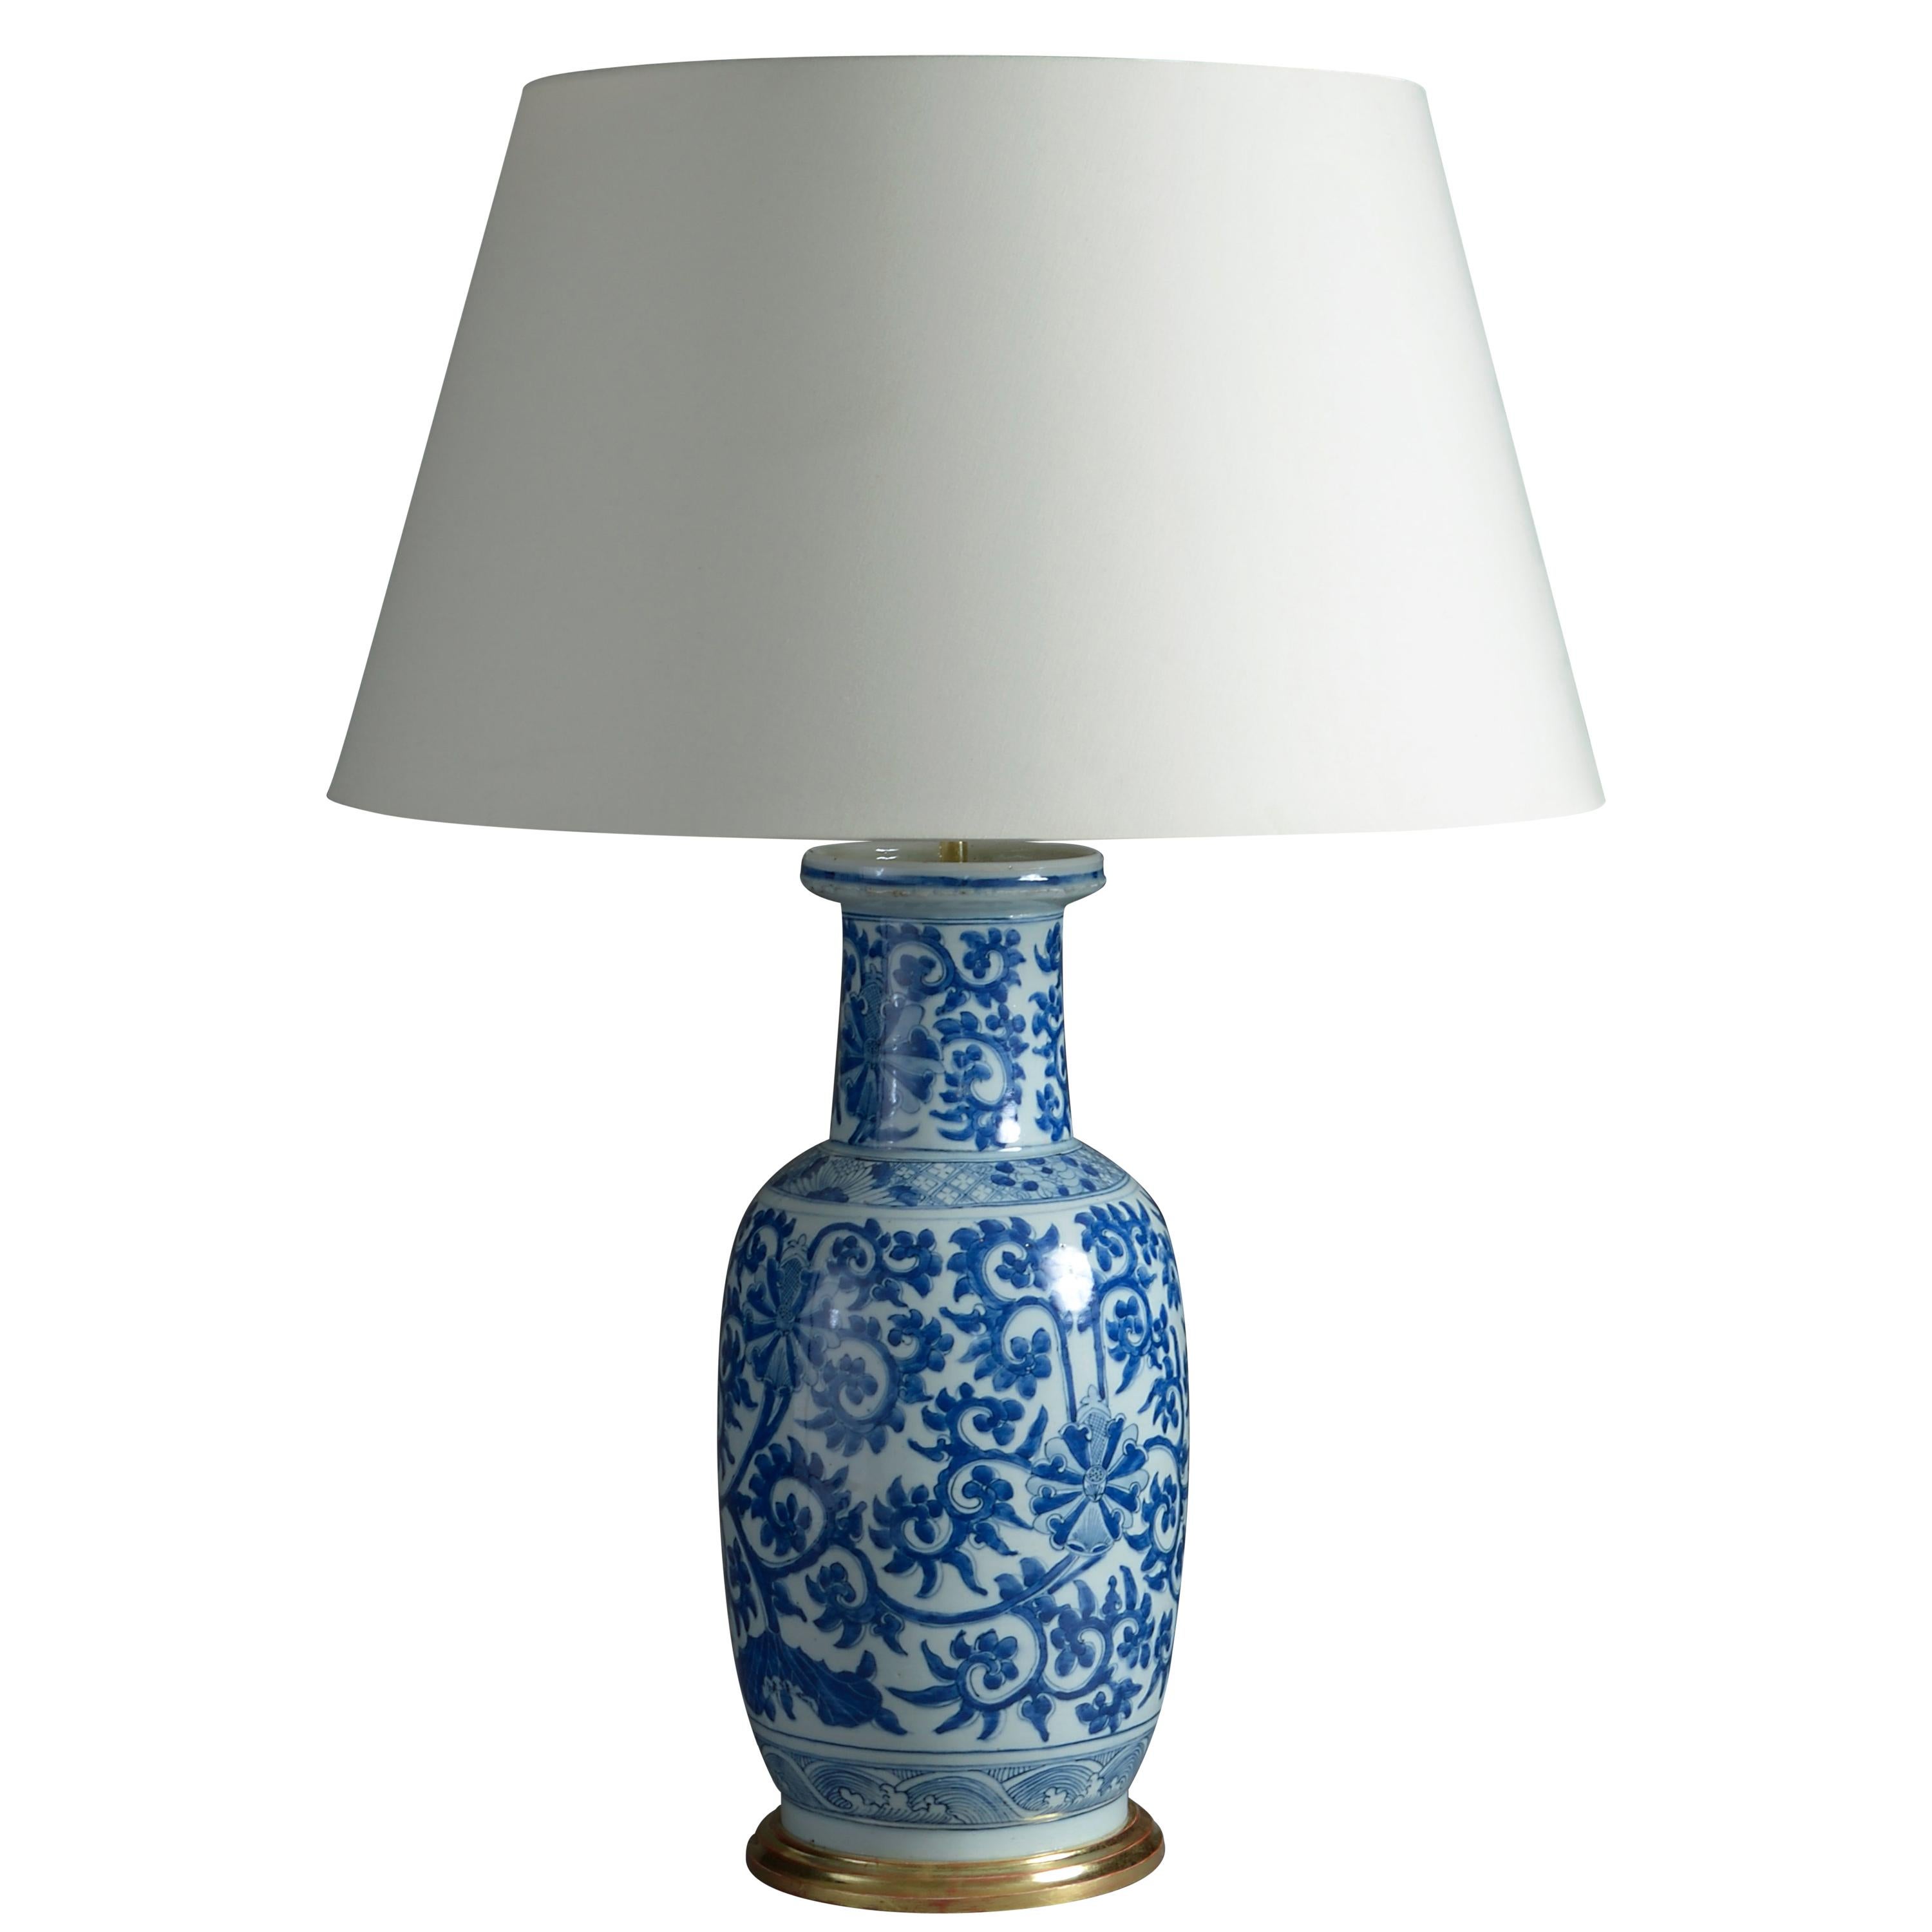 18th Century Blue and White Porcelain Vase Lamp